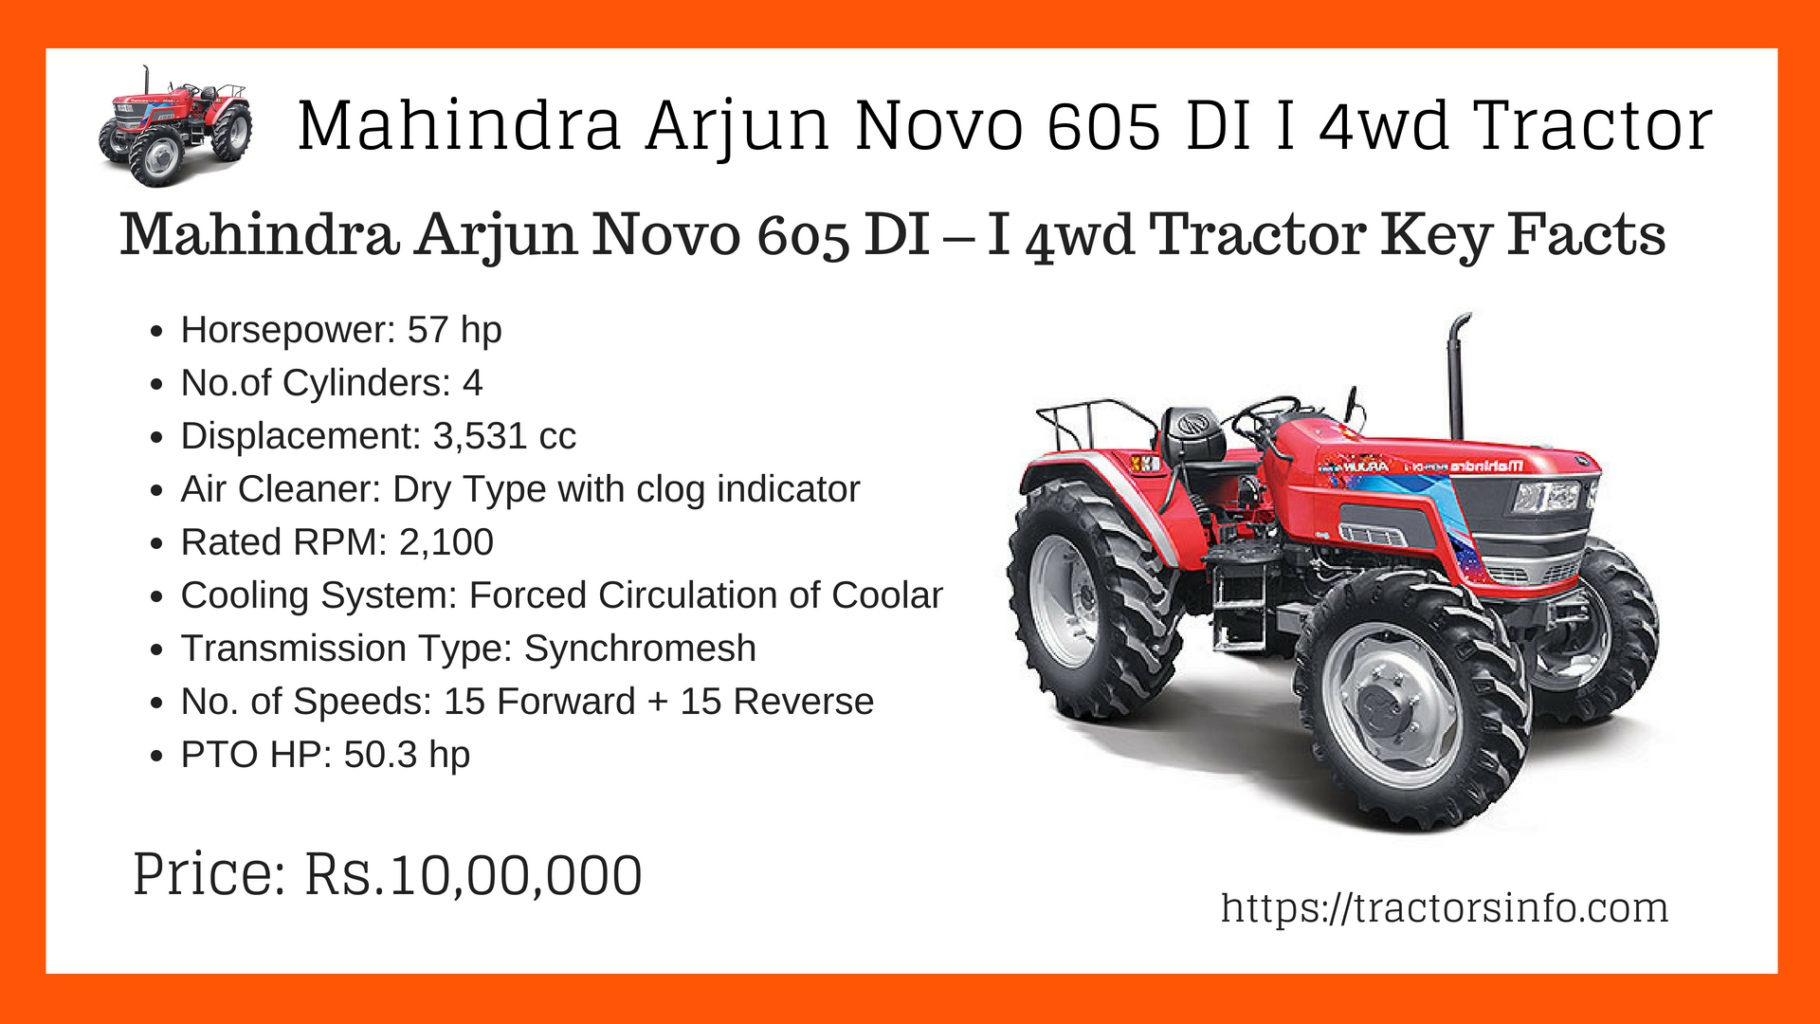 Mahindra Arjun Novo 605 DI – I 4wd Tractor